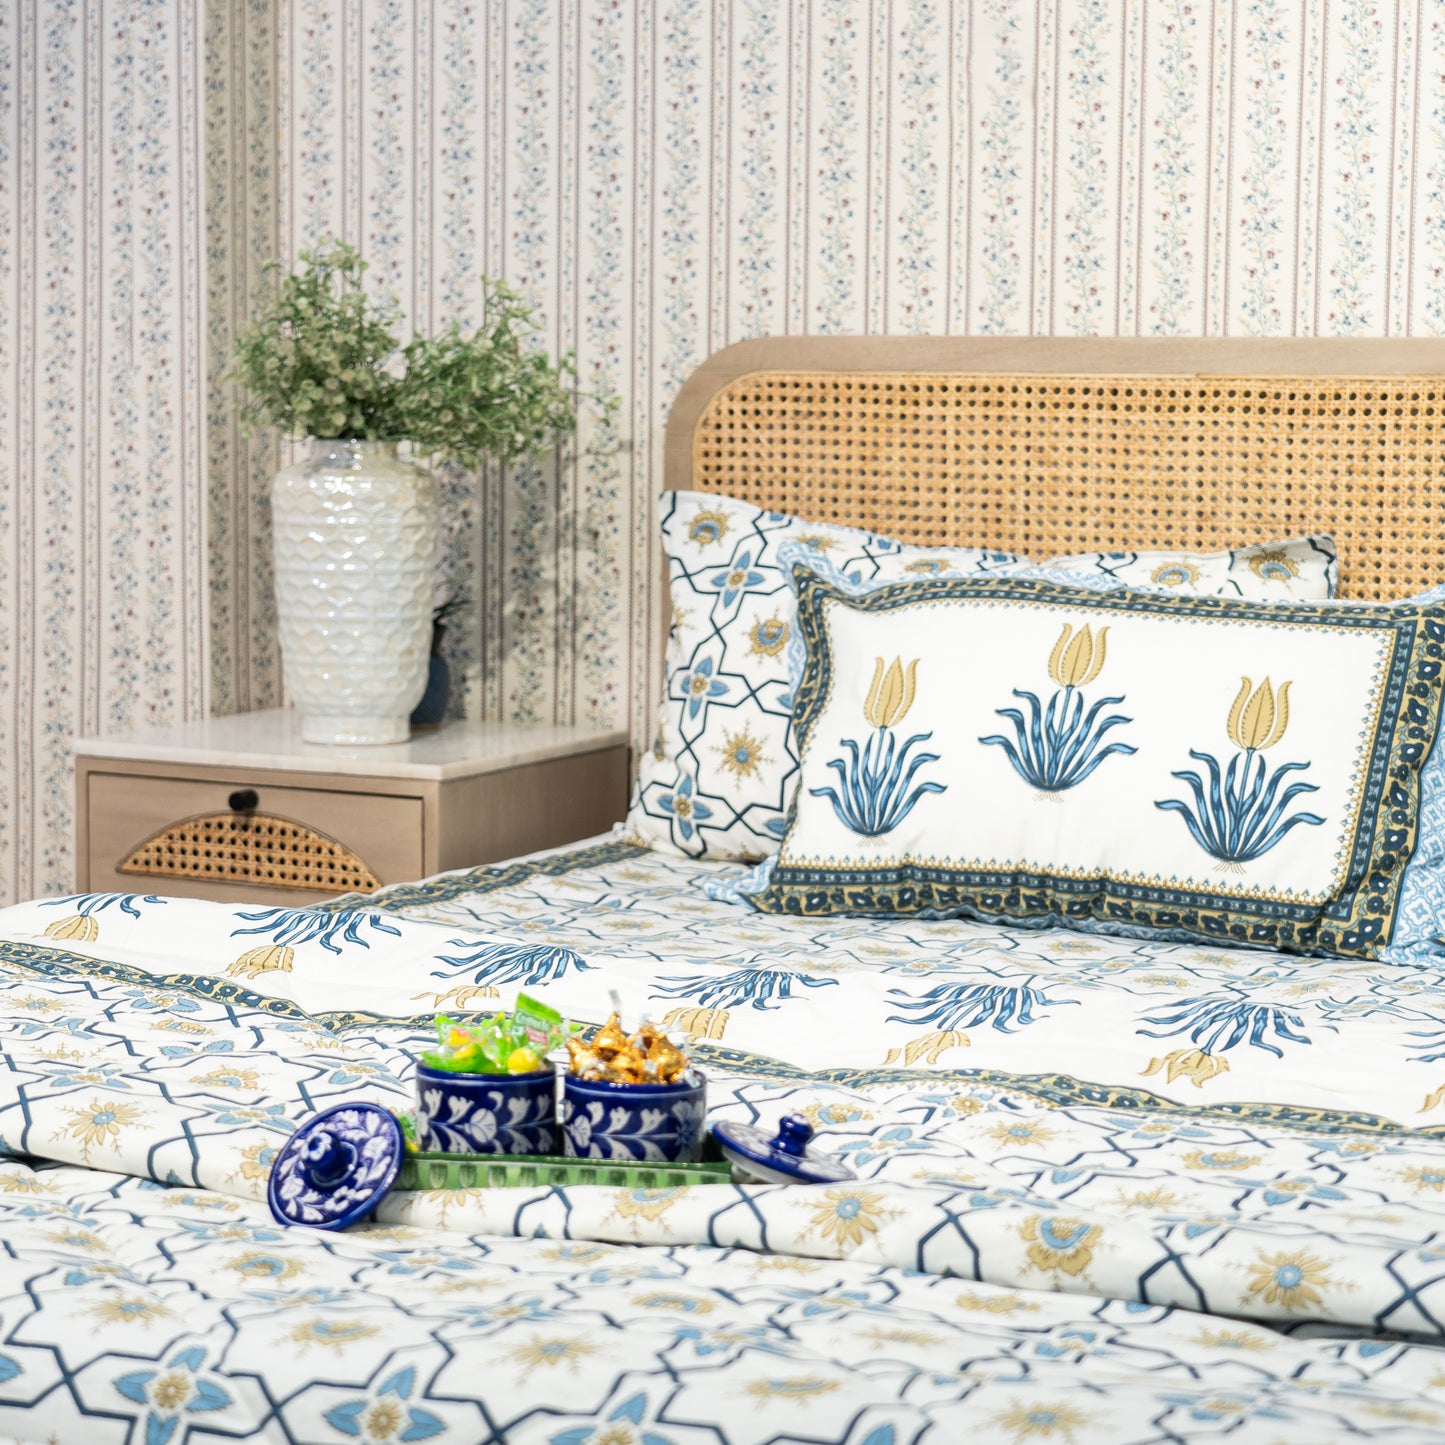 Floral Printed Bedding Set - 1 King Bedsheet, 1 Comforter, 4 Pillow Covers